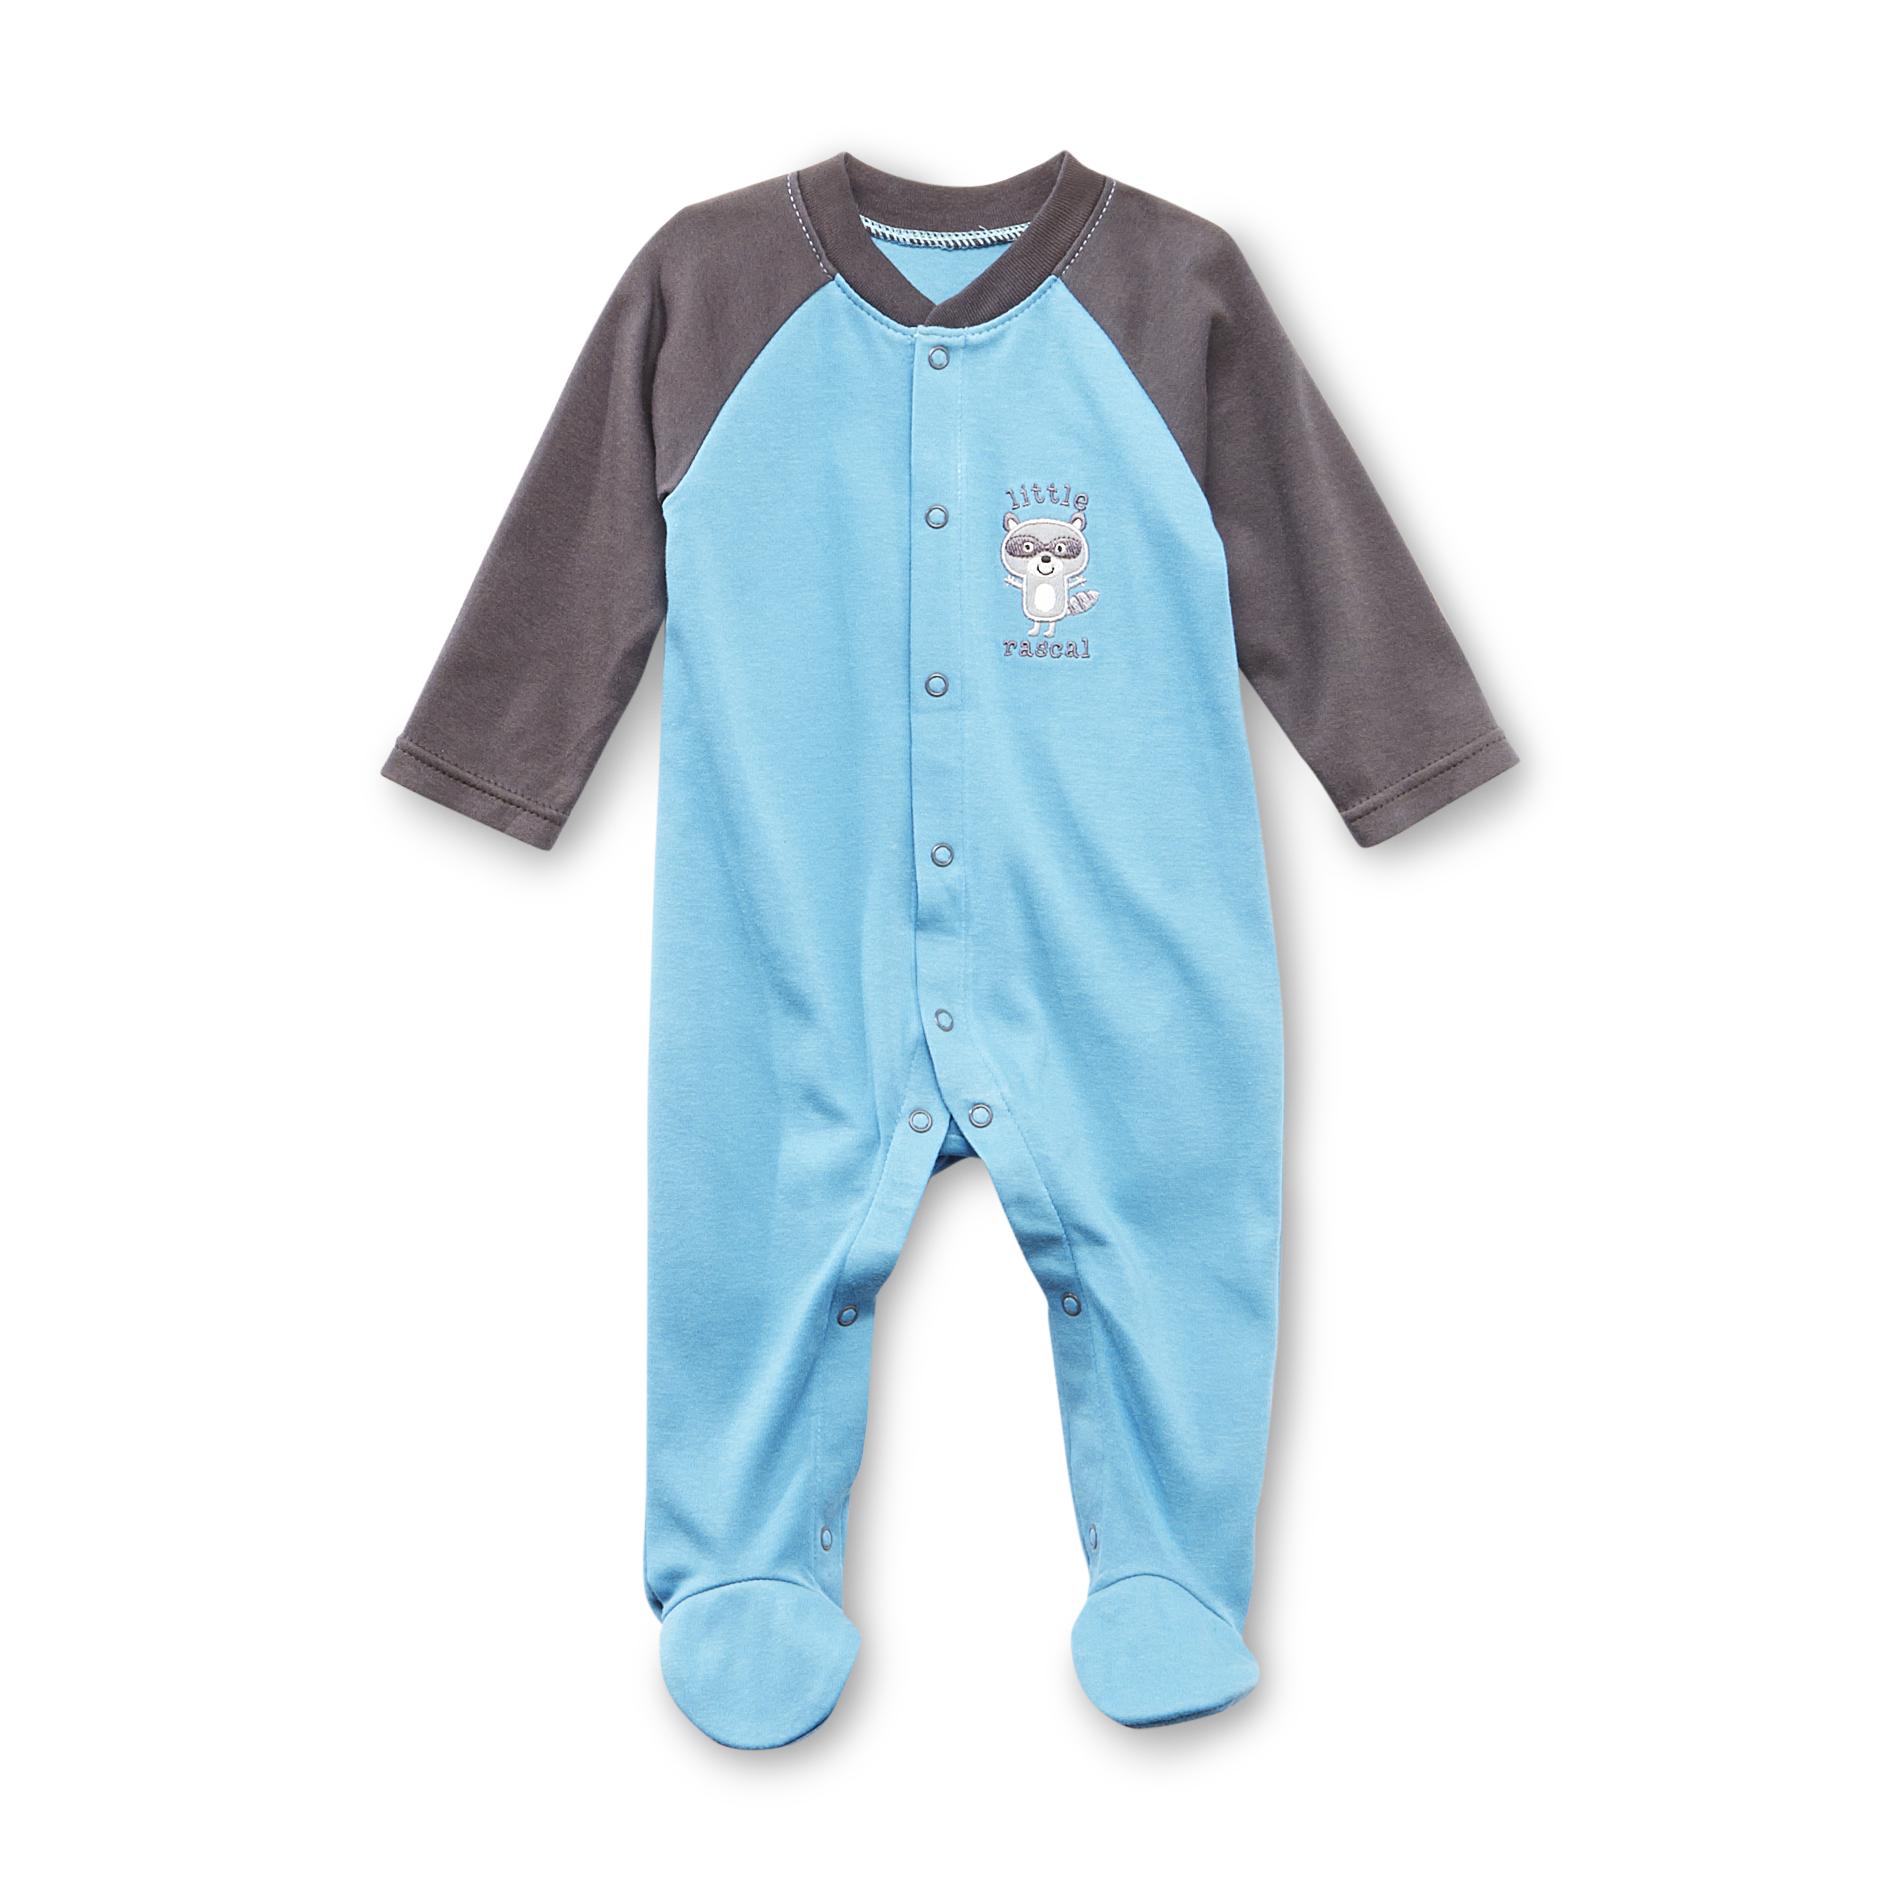 Small Wonders Newborn Boy's Sleeper Pajamas - Raccoon